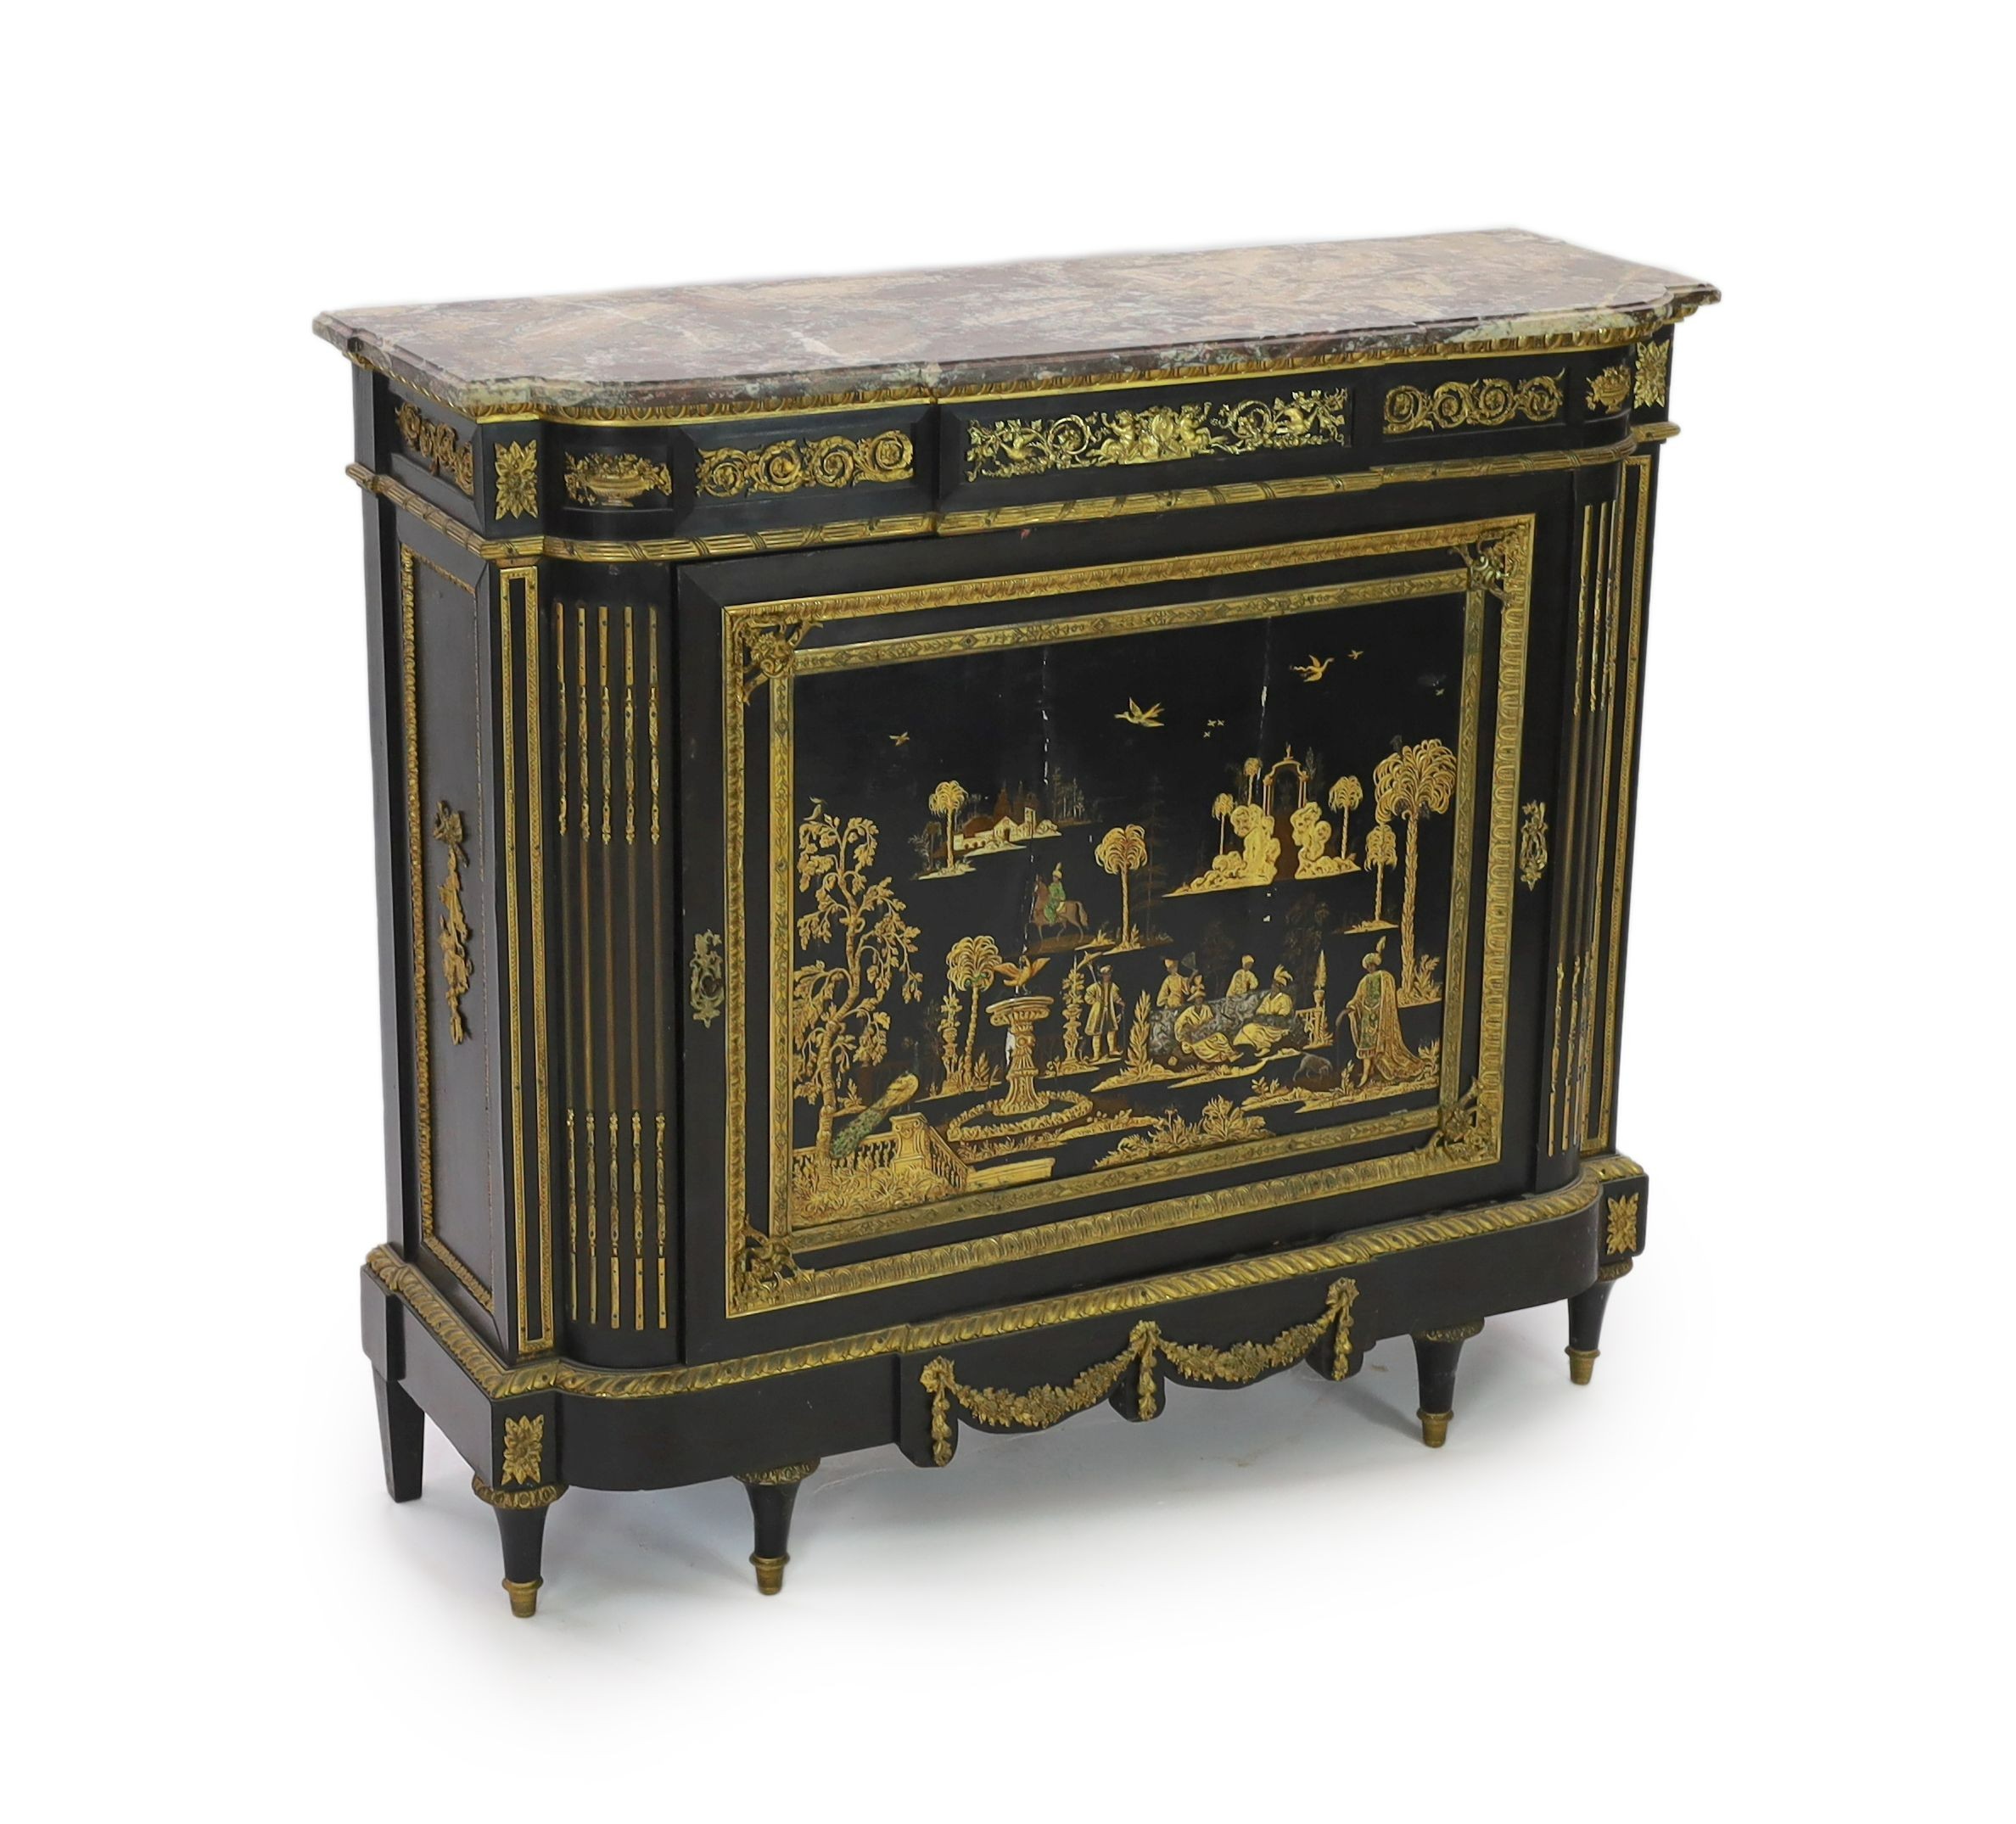 A 19th century French Louis XVI style ormolu mounted ebonised side cabinet, W.134cm D.46cm H.122cm